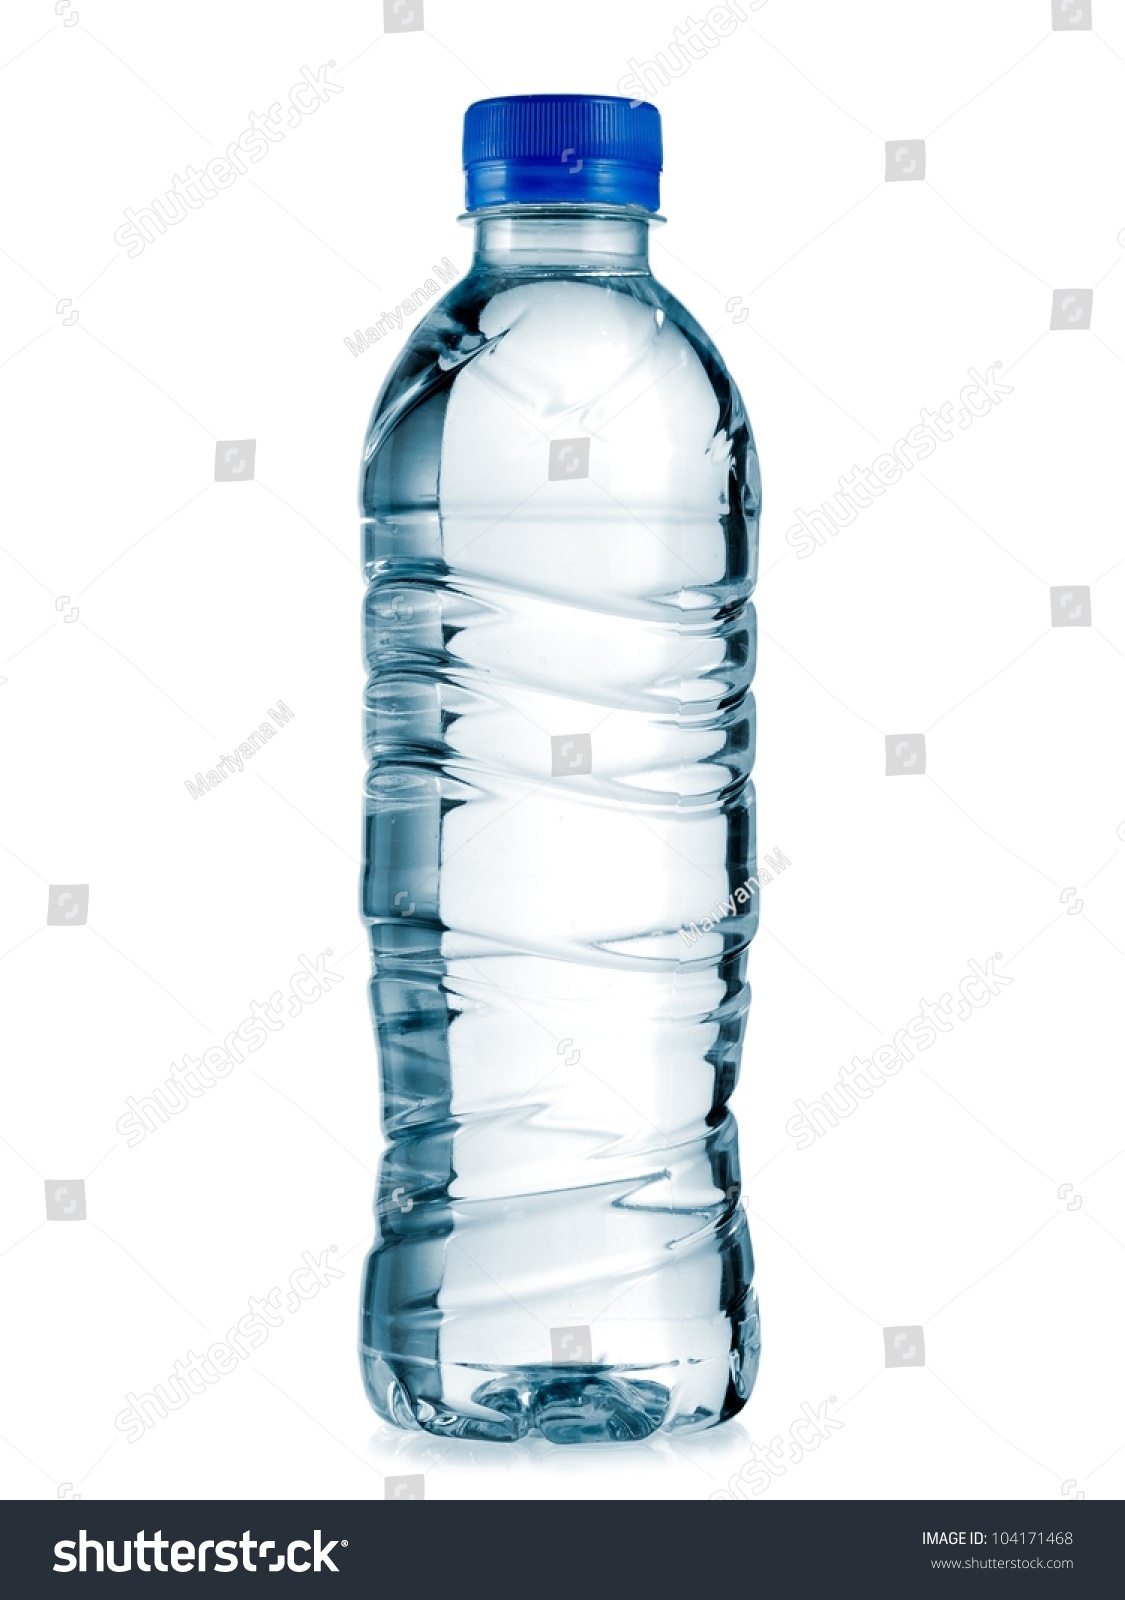 stock-photo-small-water-bottle-104171468.jpg